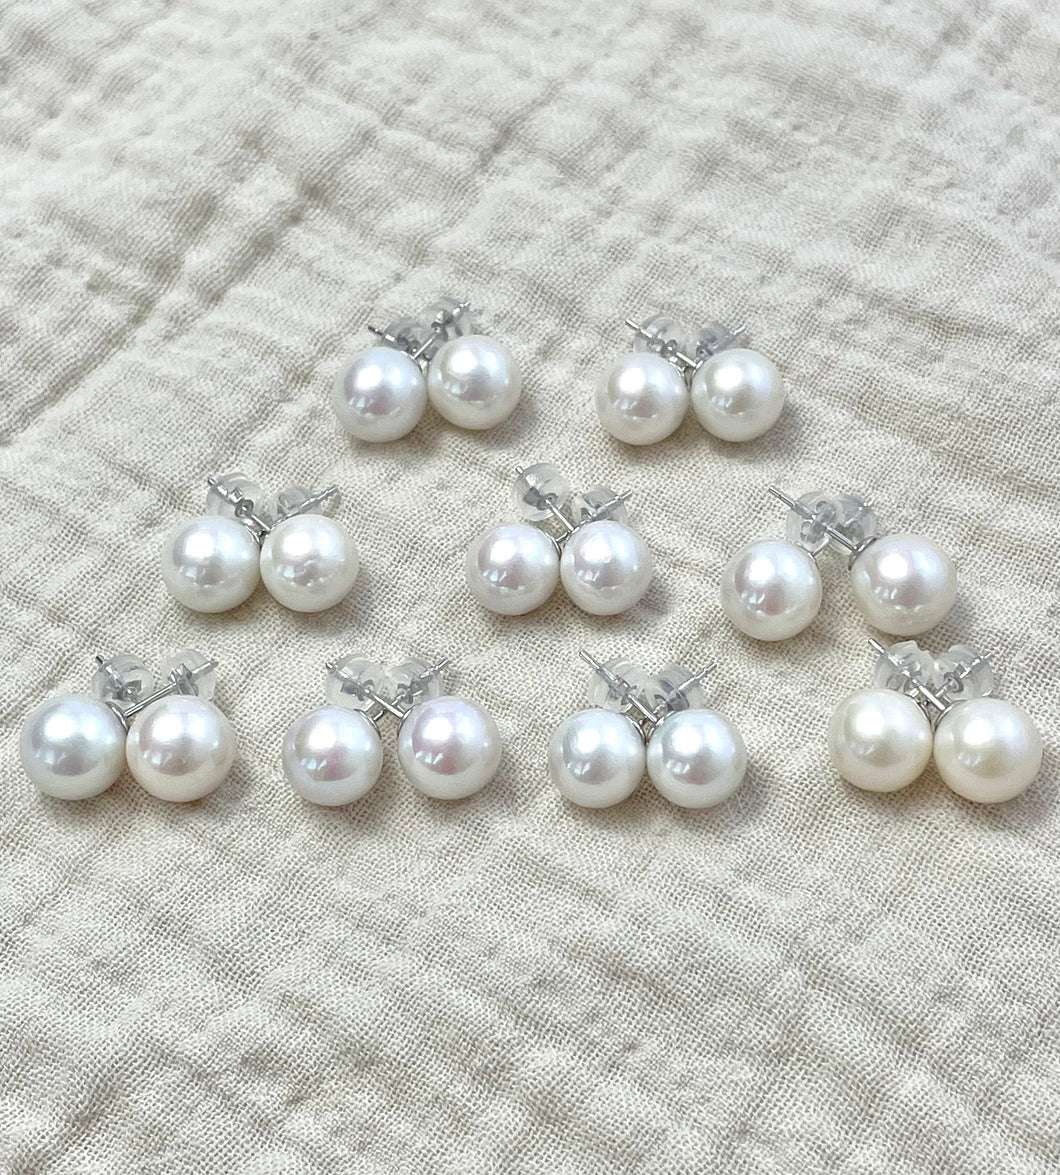 Stunning pearl earring studs, SKU# 2017